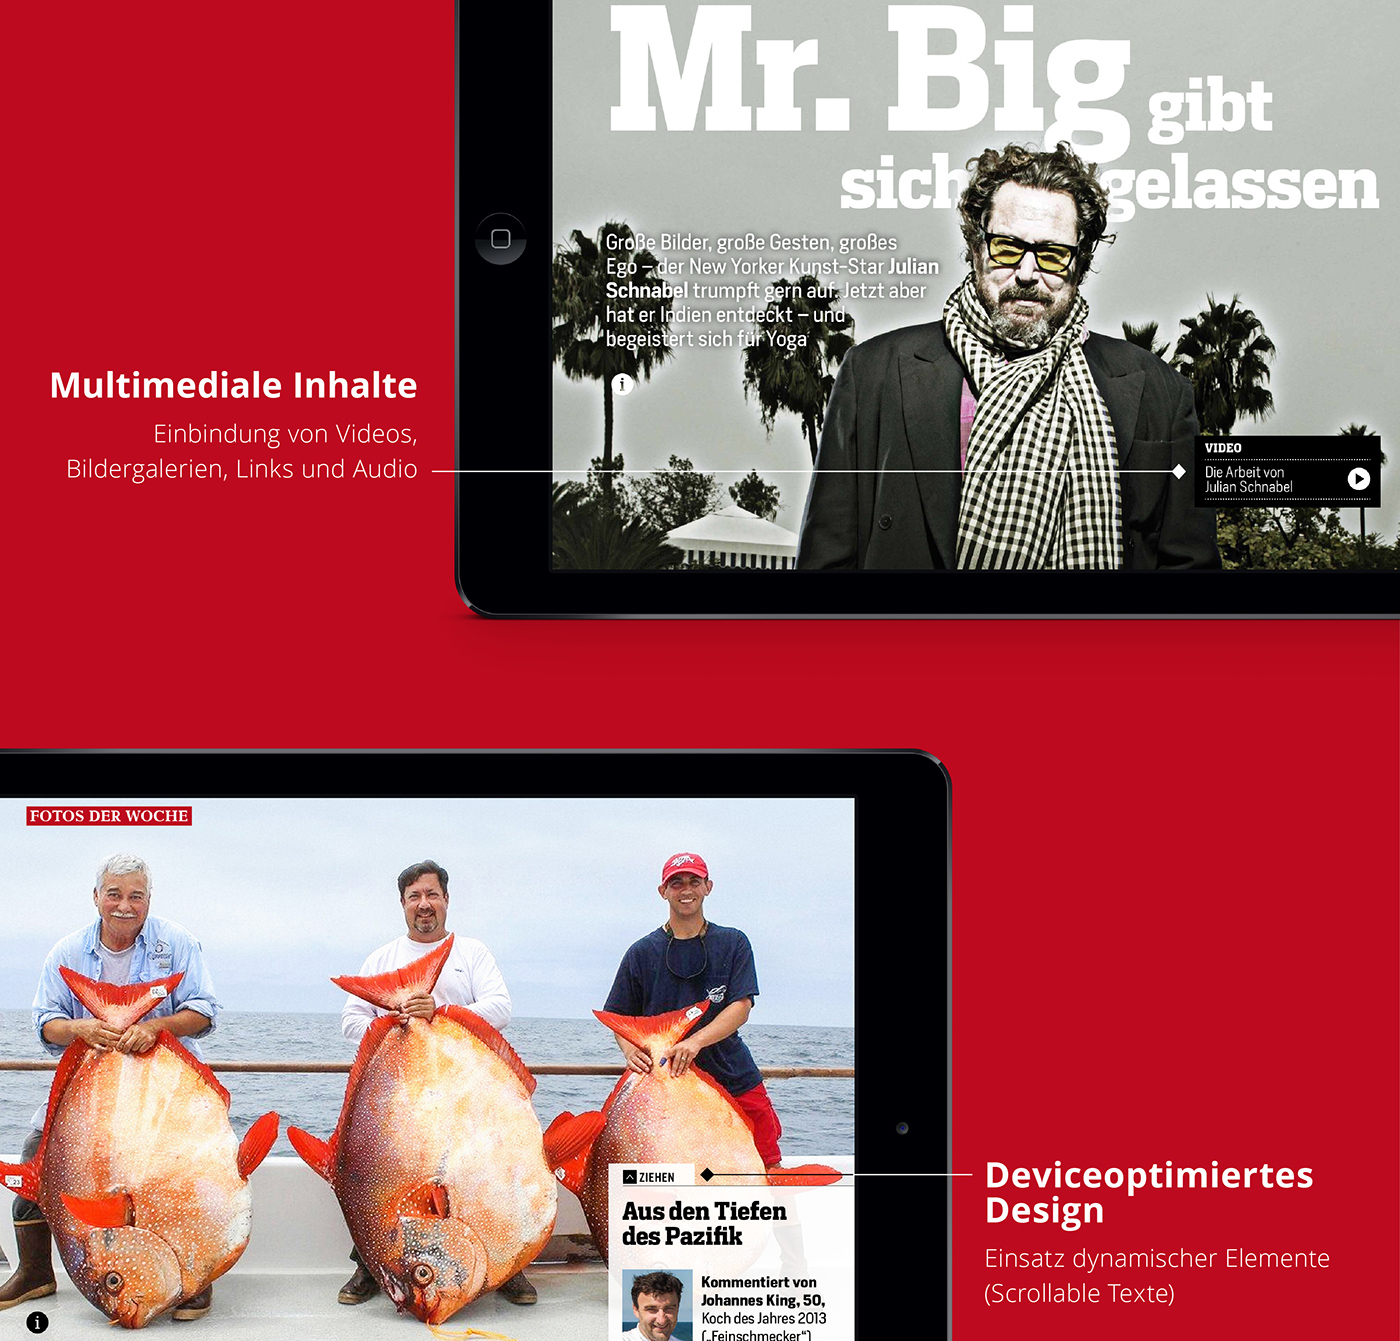 Adobe digital publishing app tablet DPS iPad 2issue Burda Focus magazin